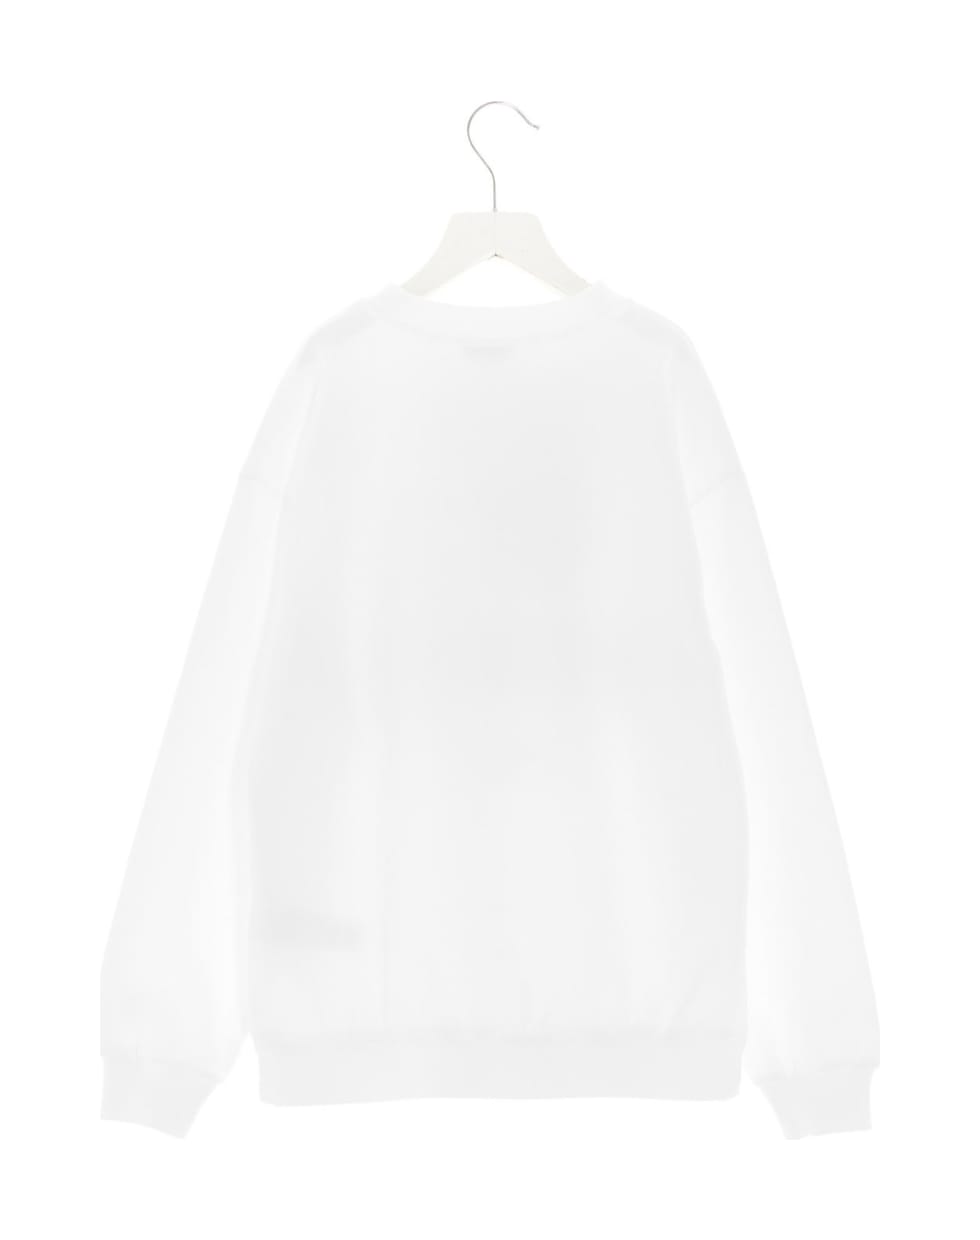 Dolce & Gabbana '90s Supermodel' Sweatshirt - White